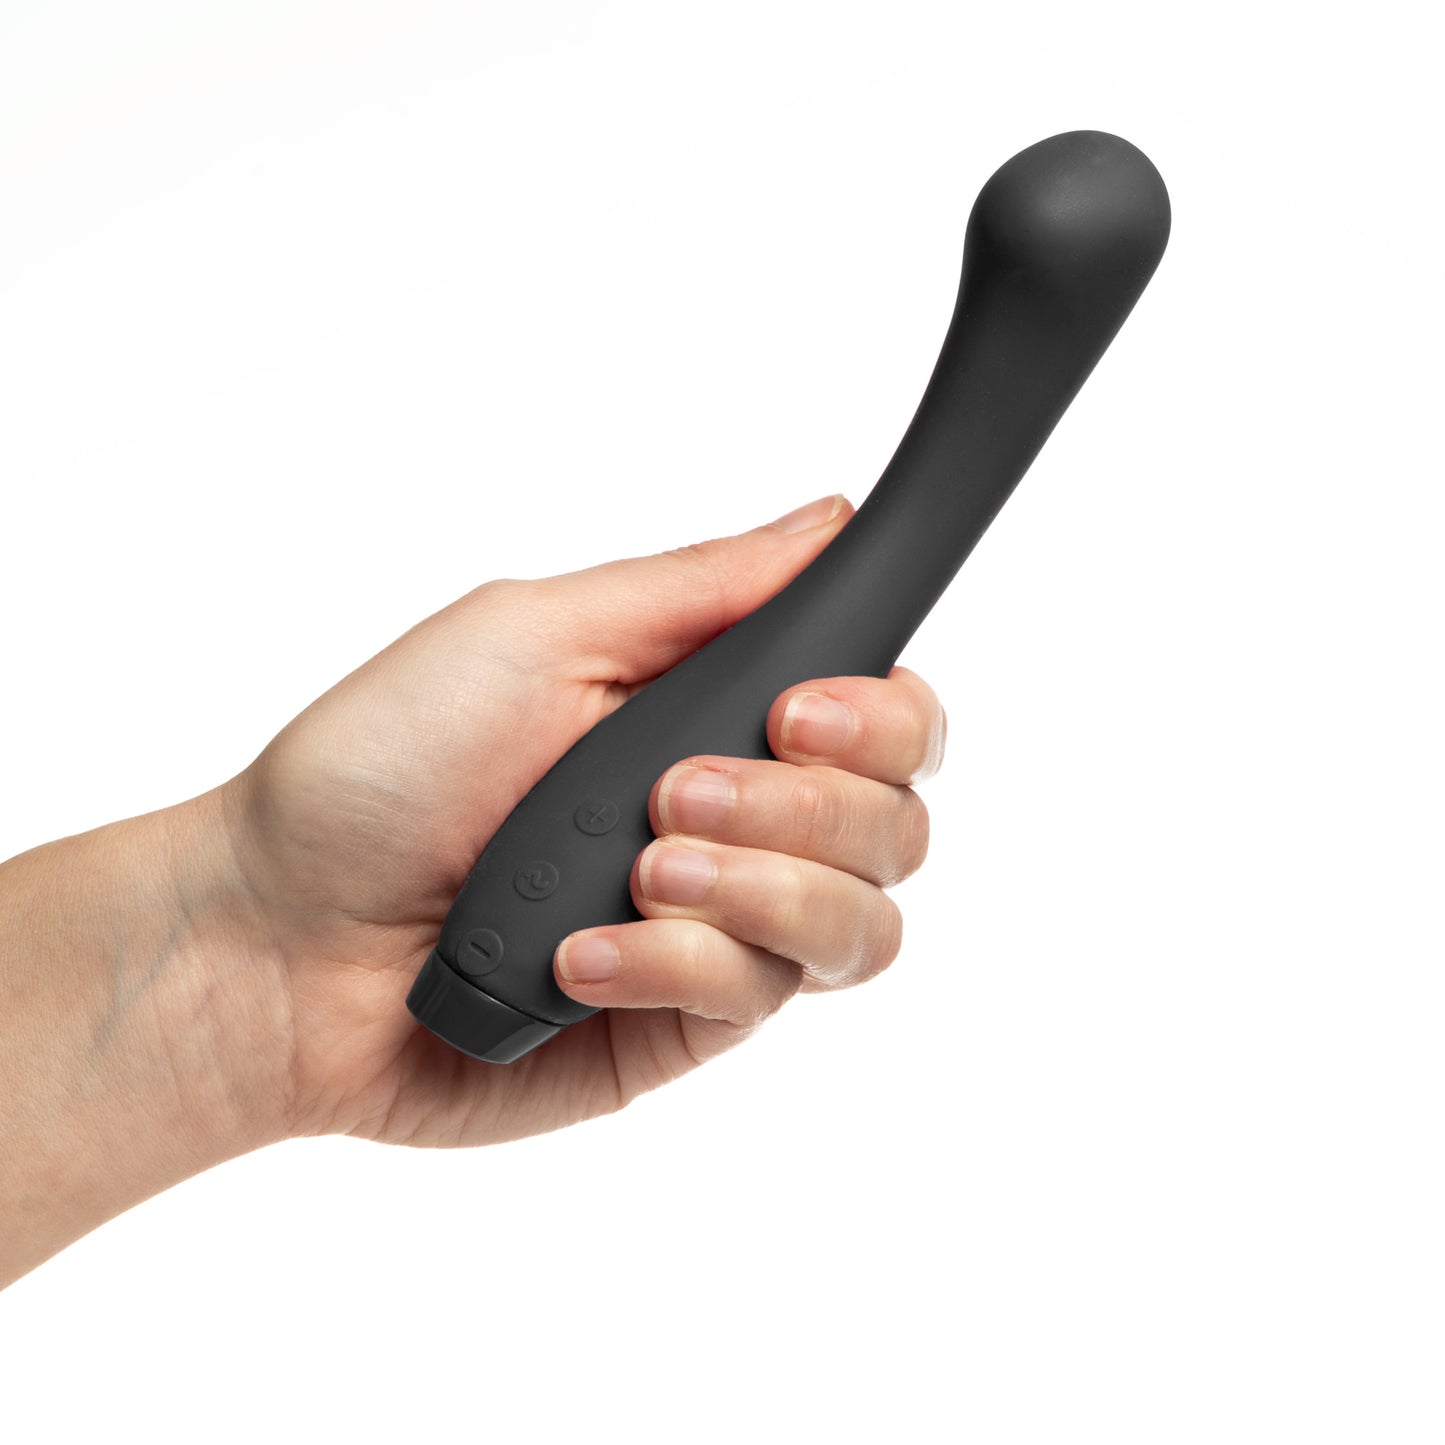 Juno Flex G-Spot Vibrator with Body Flex Technology